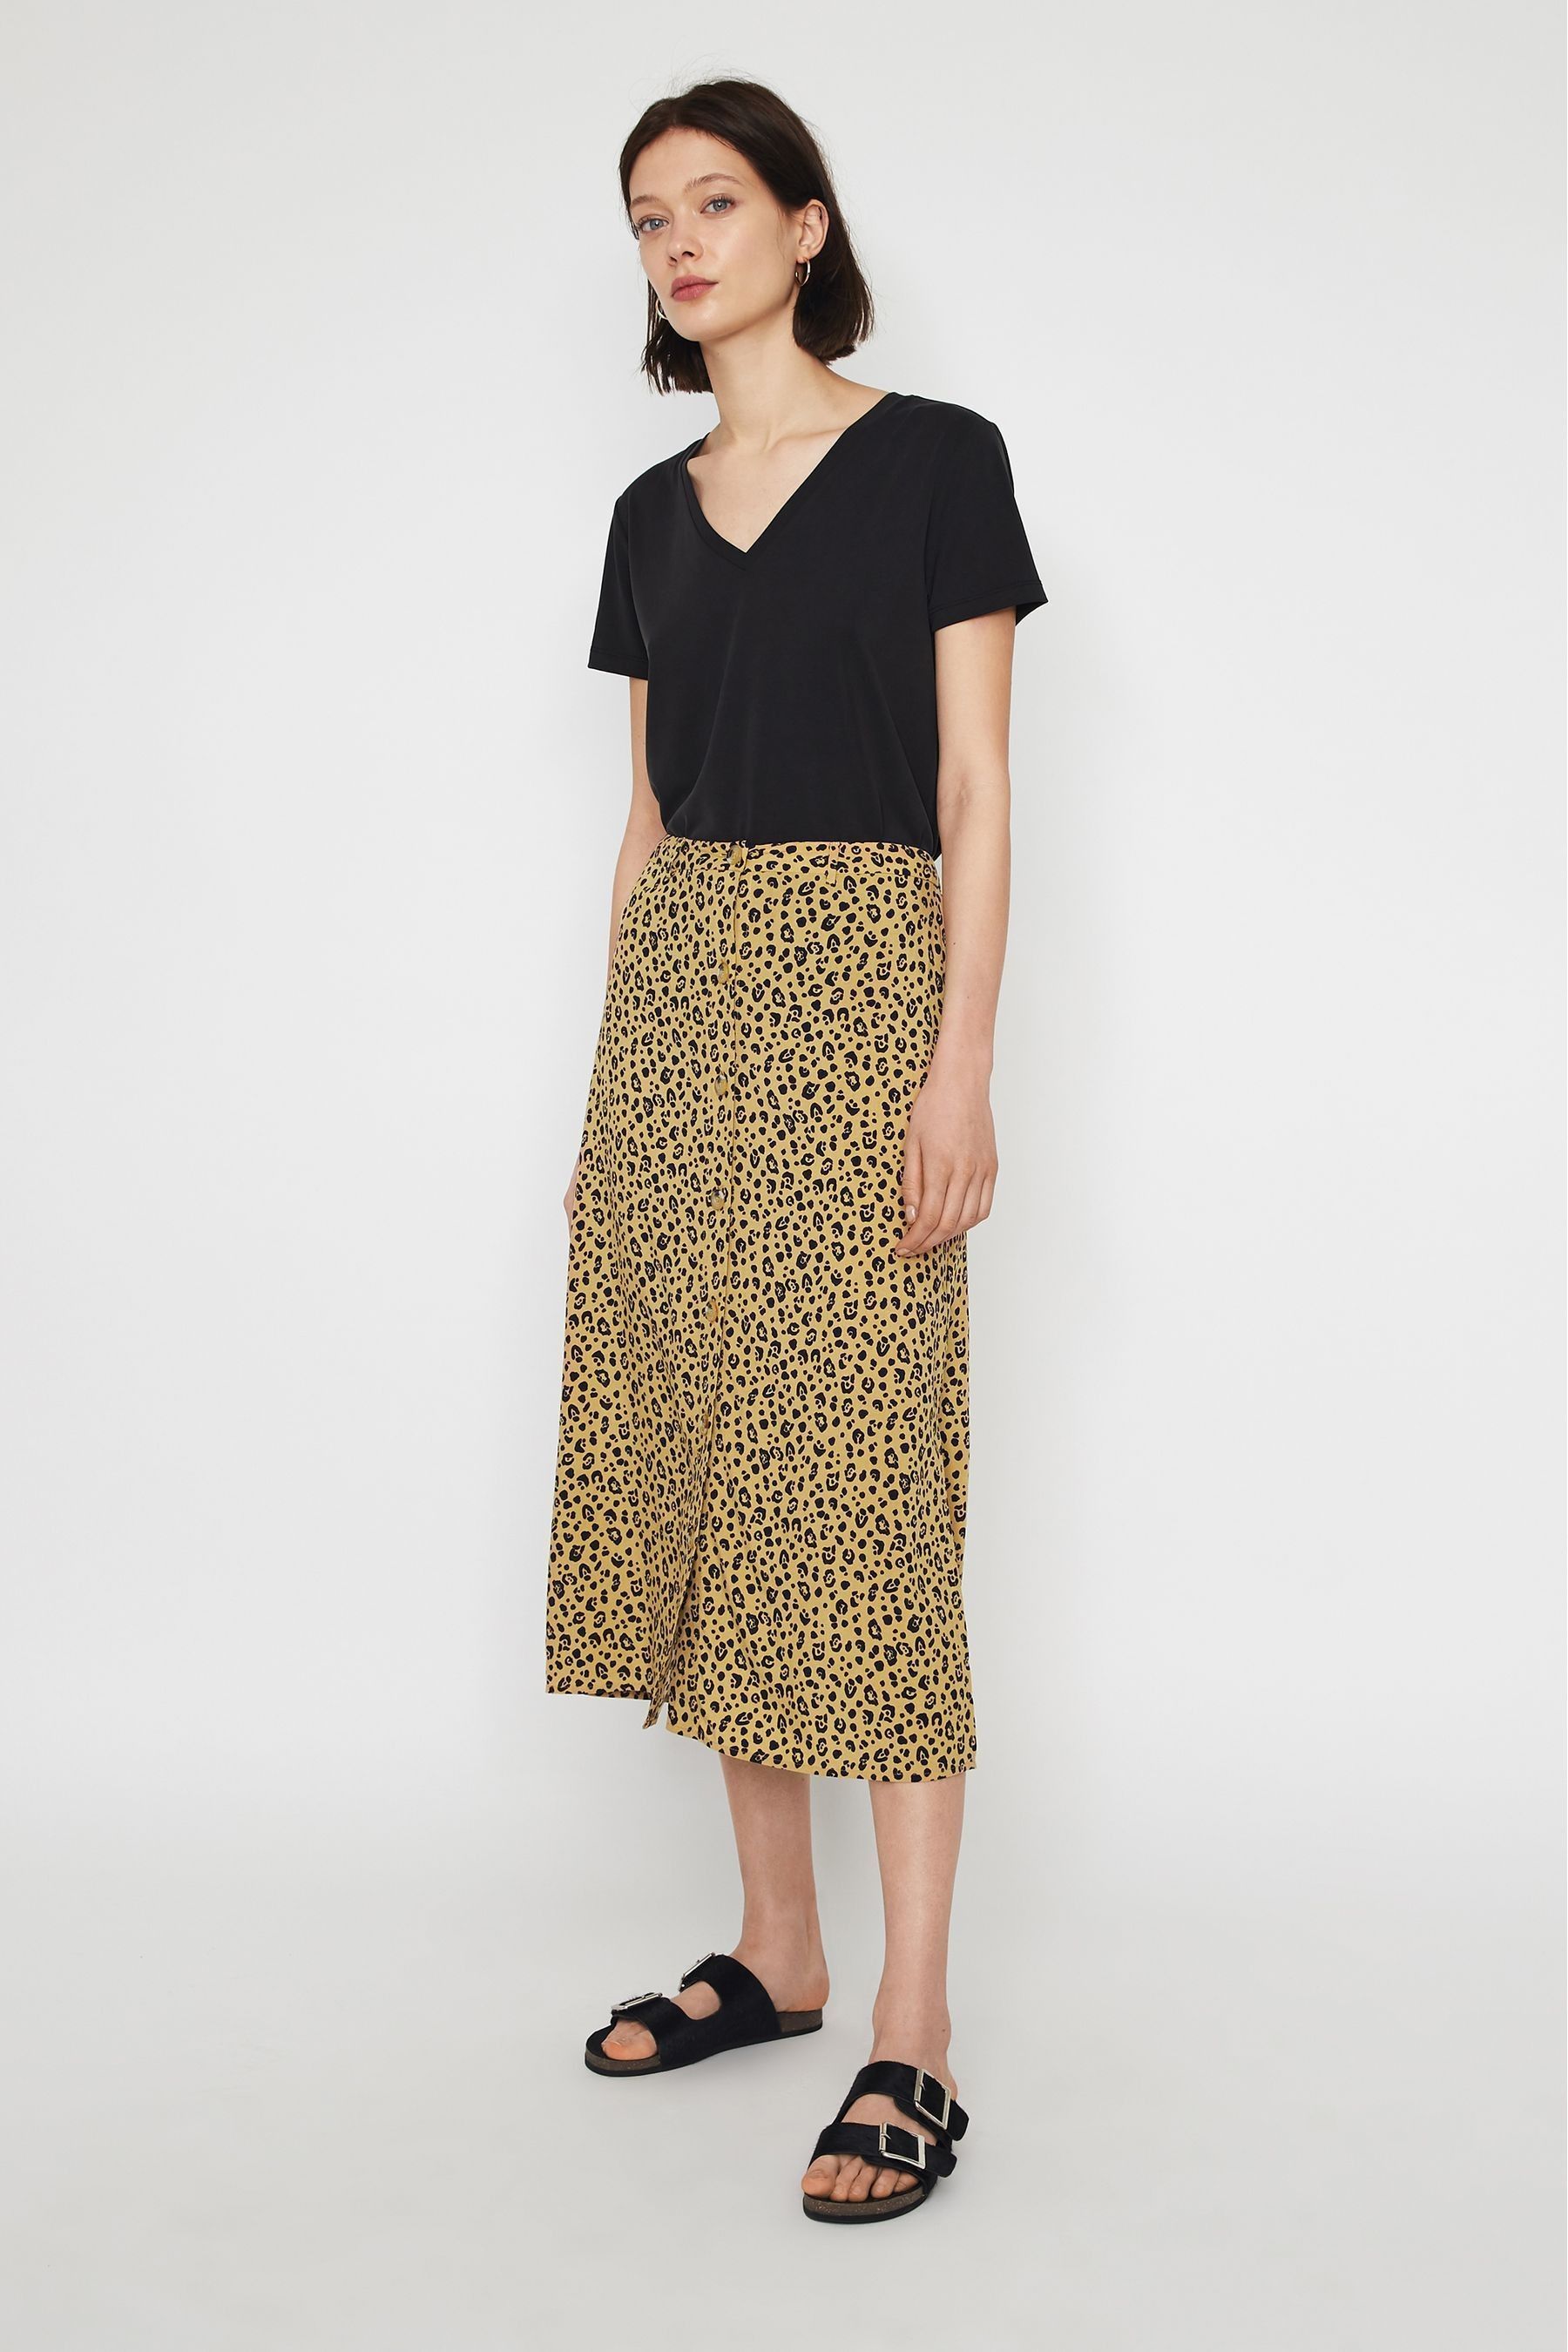 Amanda Holden wears leopard print maxi 